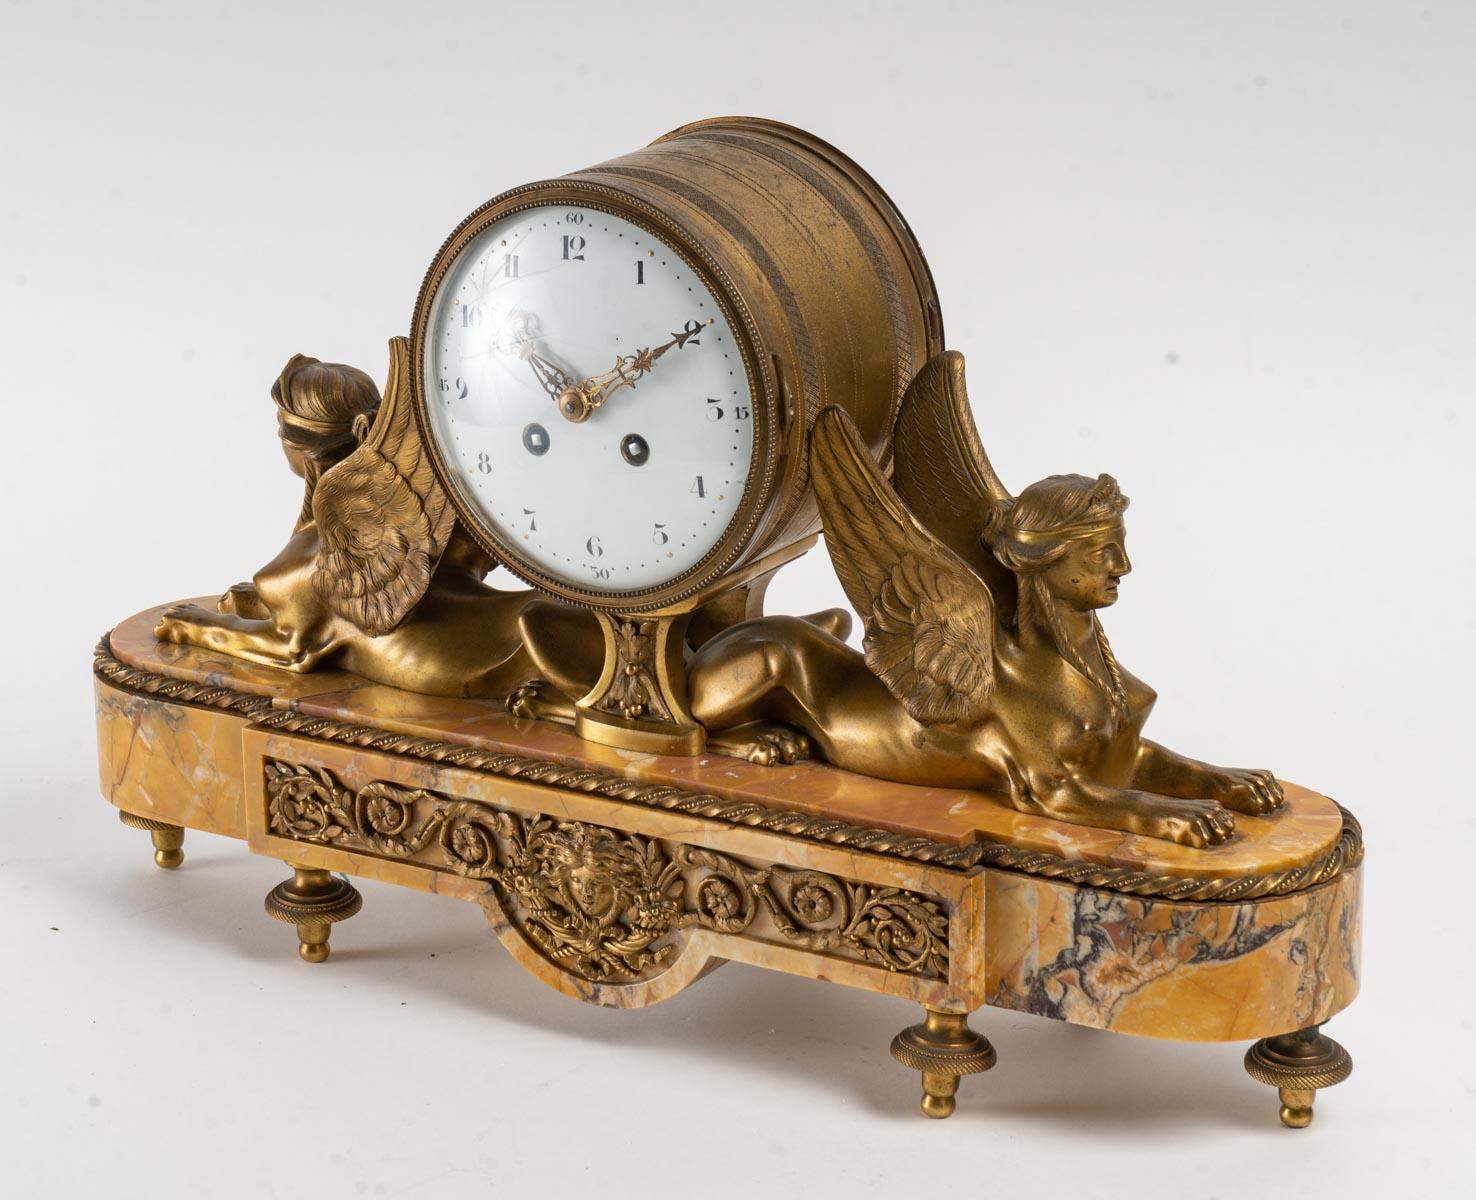 A Napoleon III period gilt bronze and marble clock.
Measures: H: 50 cm, W: 30 cm, D: 14 cm.